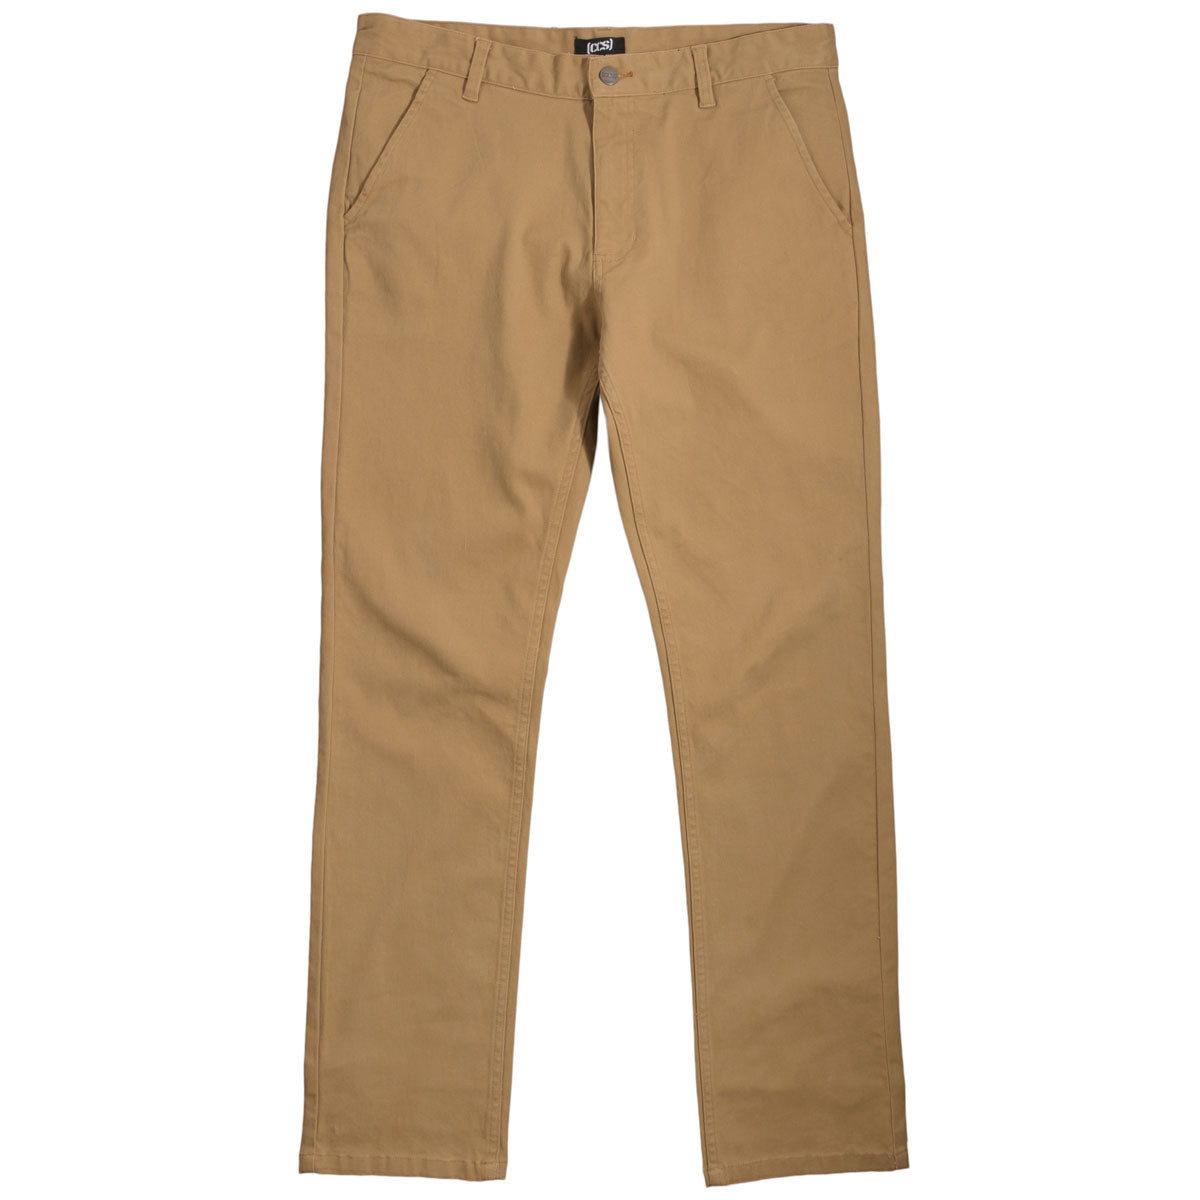 CCS Standard Plus Straight Chino Pants - Khaki image 5